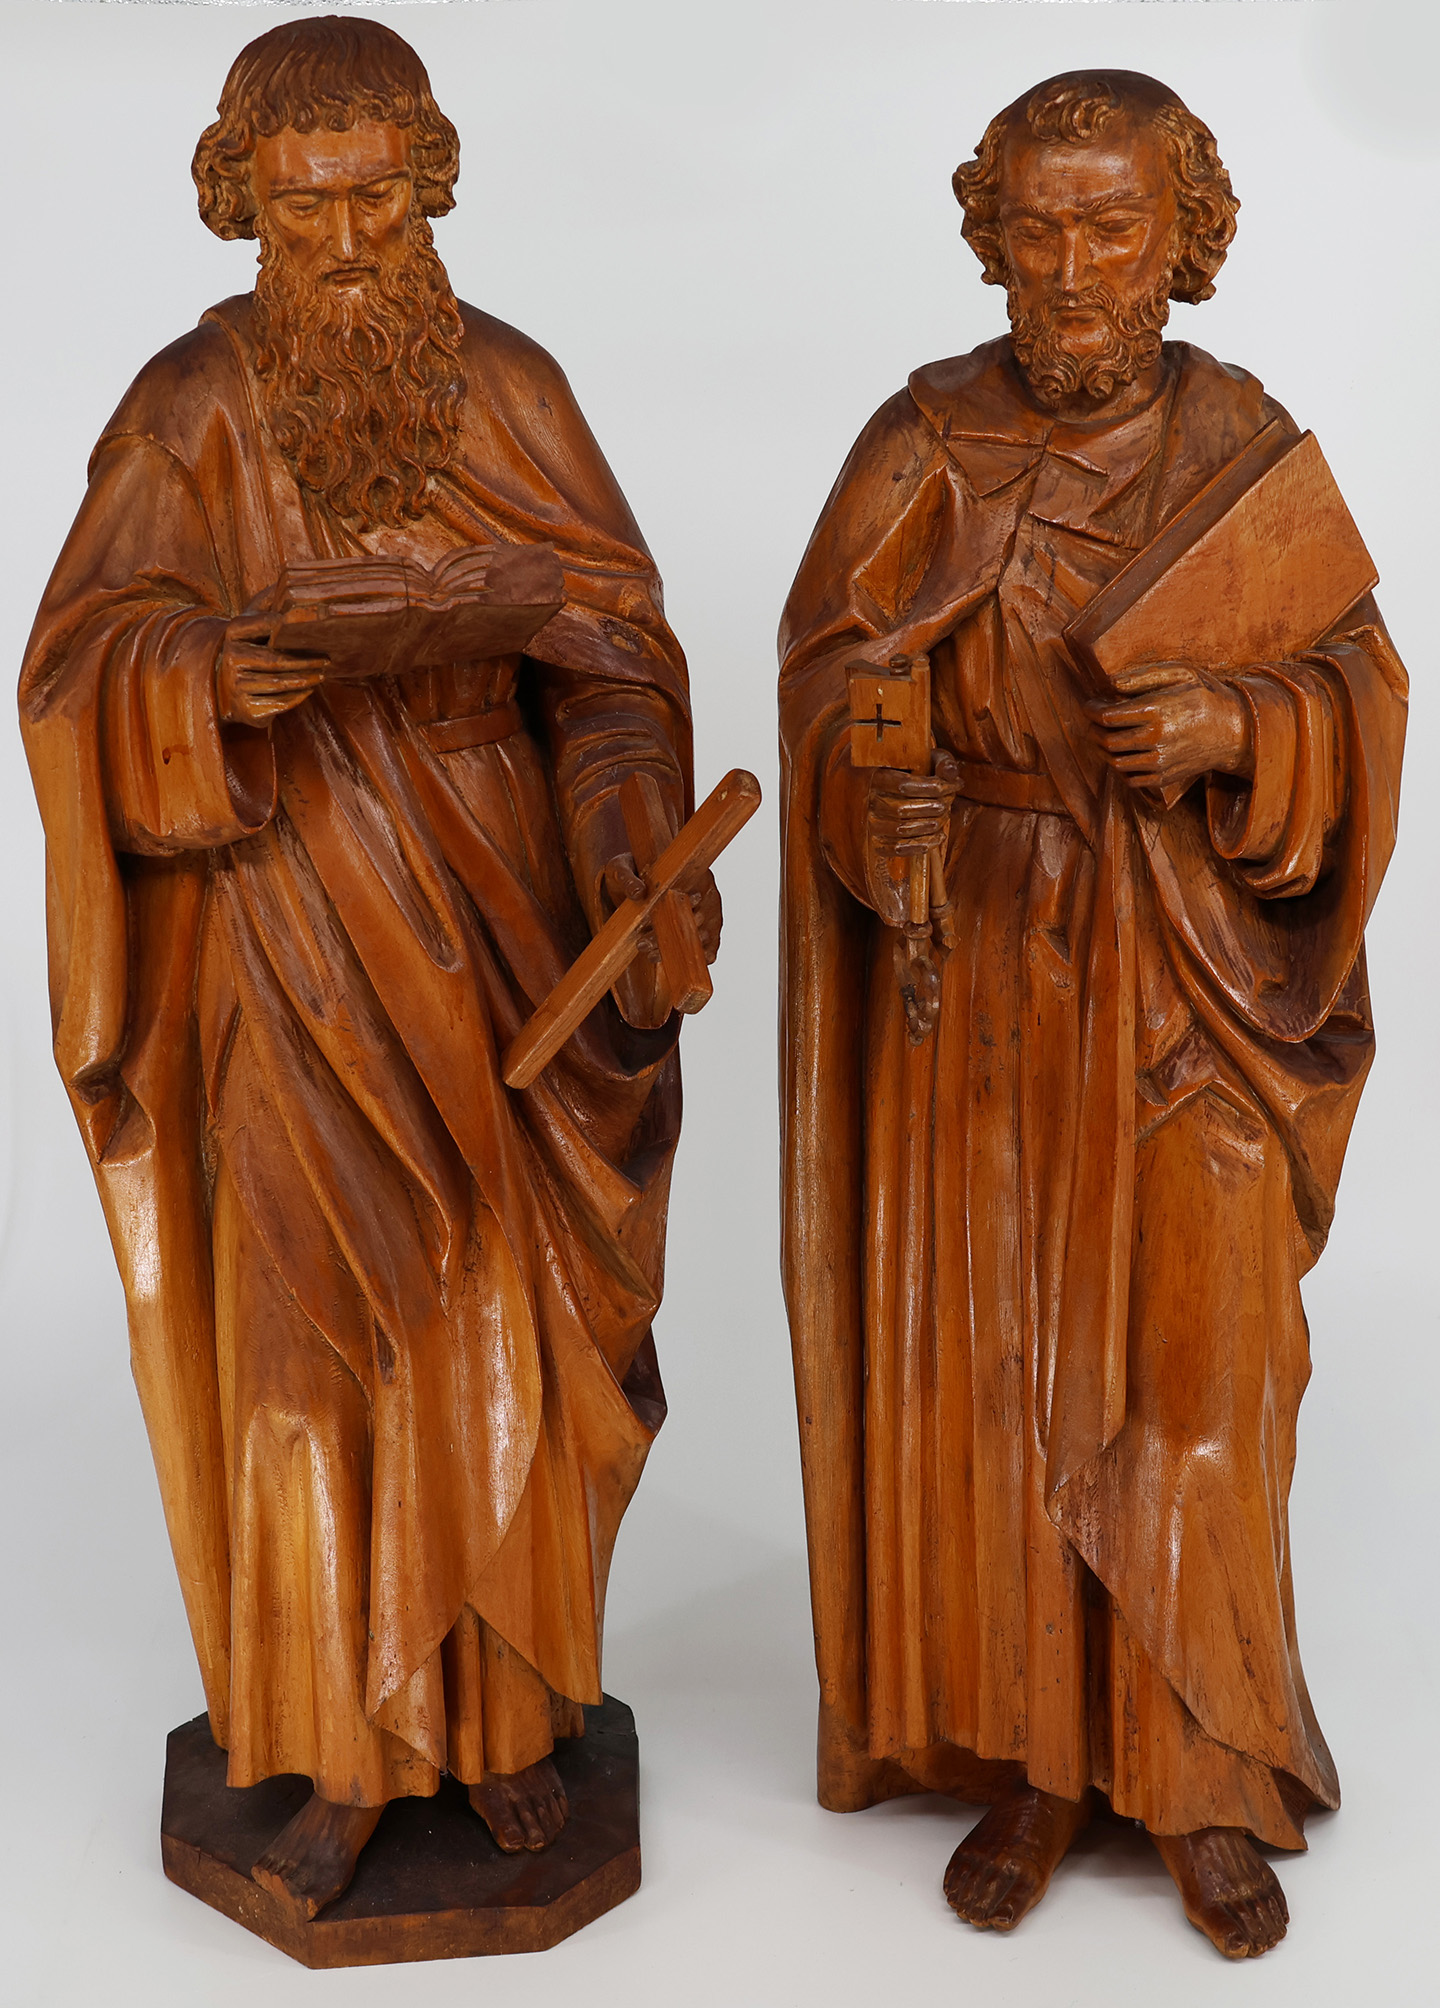 Apostel Petrus und Paulus, Holz, 18./19. Jh., Tirol, H 90 und 94 cm. Apostles Peter and Paul,